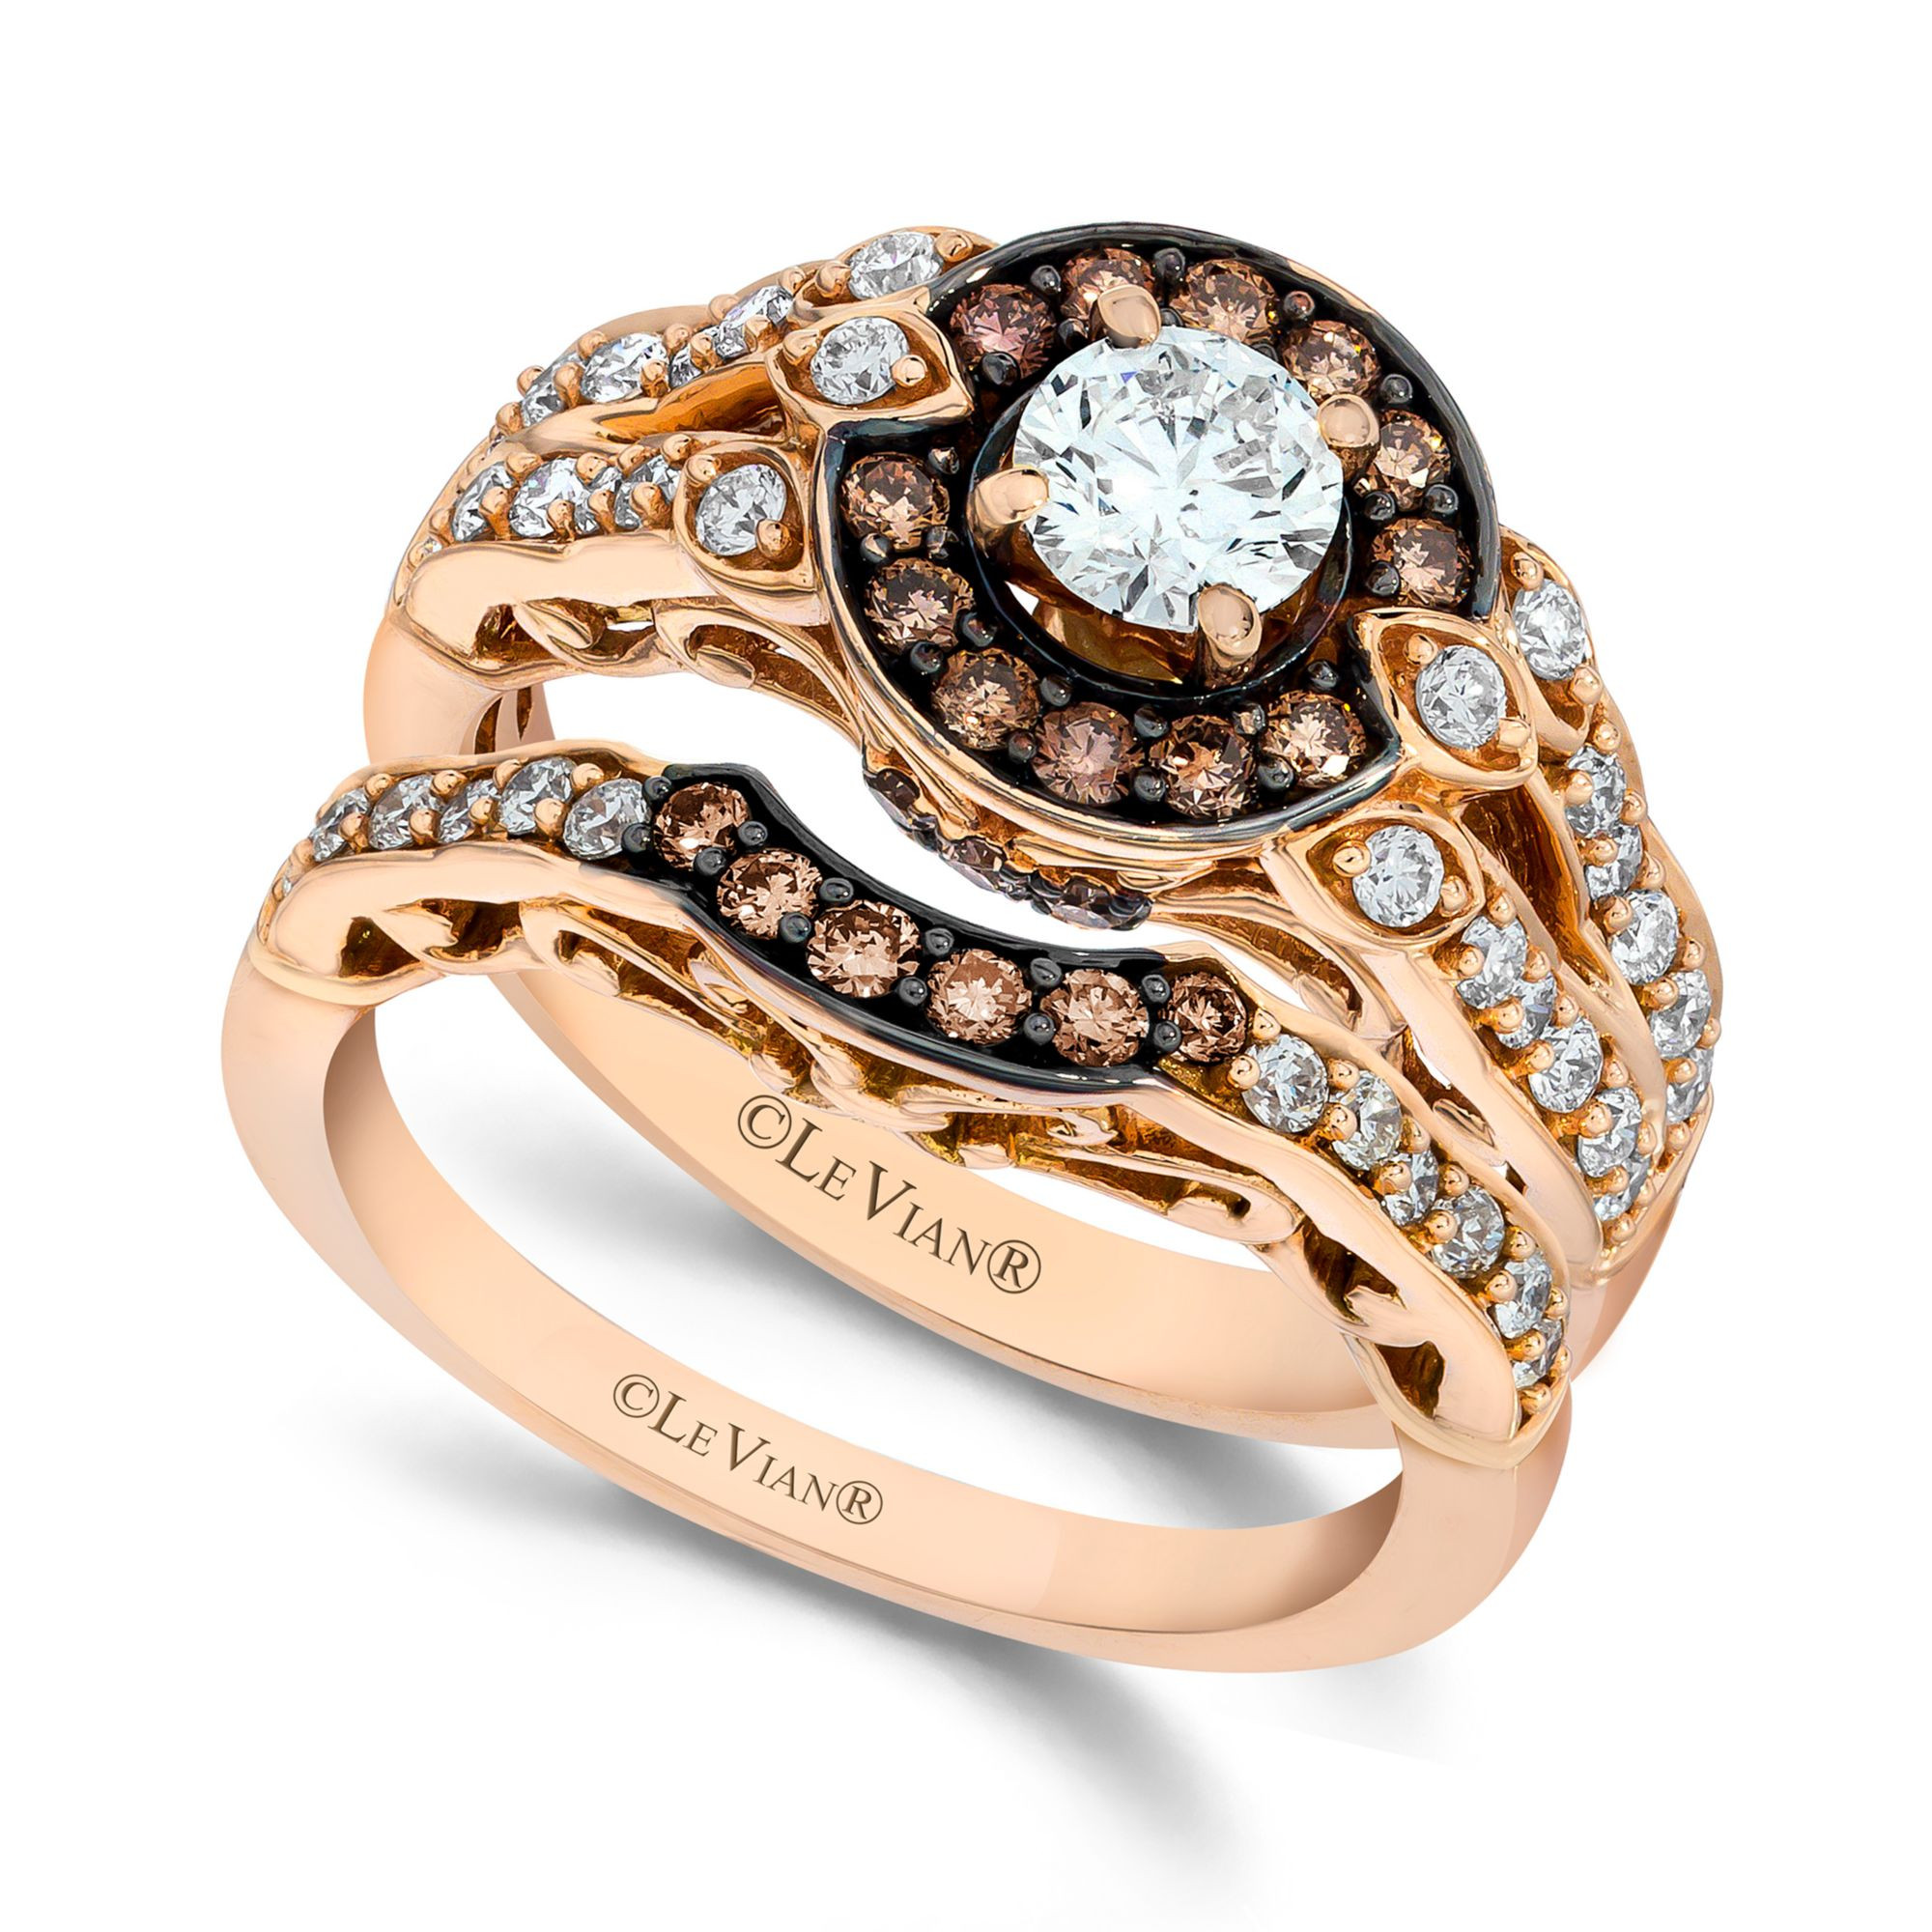 Chocolate Diamond Engagement Ring
 Lyst Le Vian Chocolate and White Diamond Engagement Ring